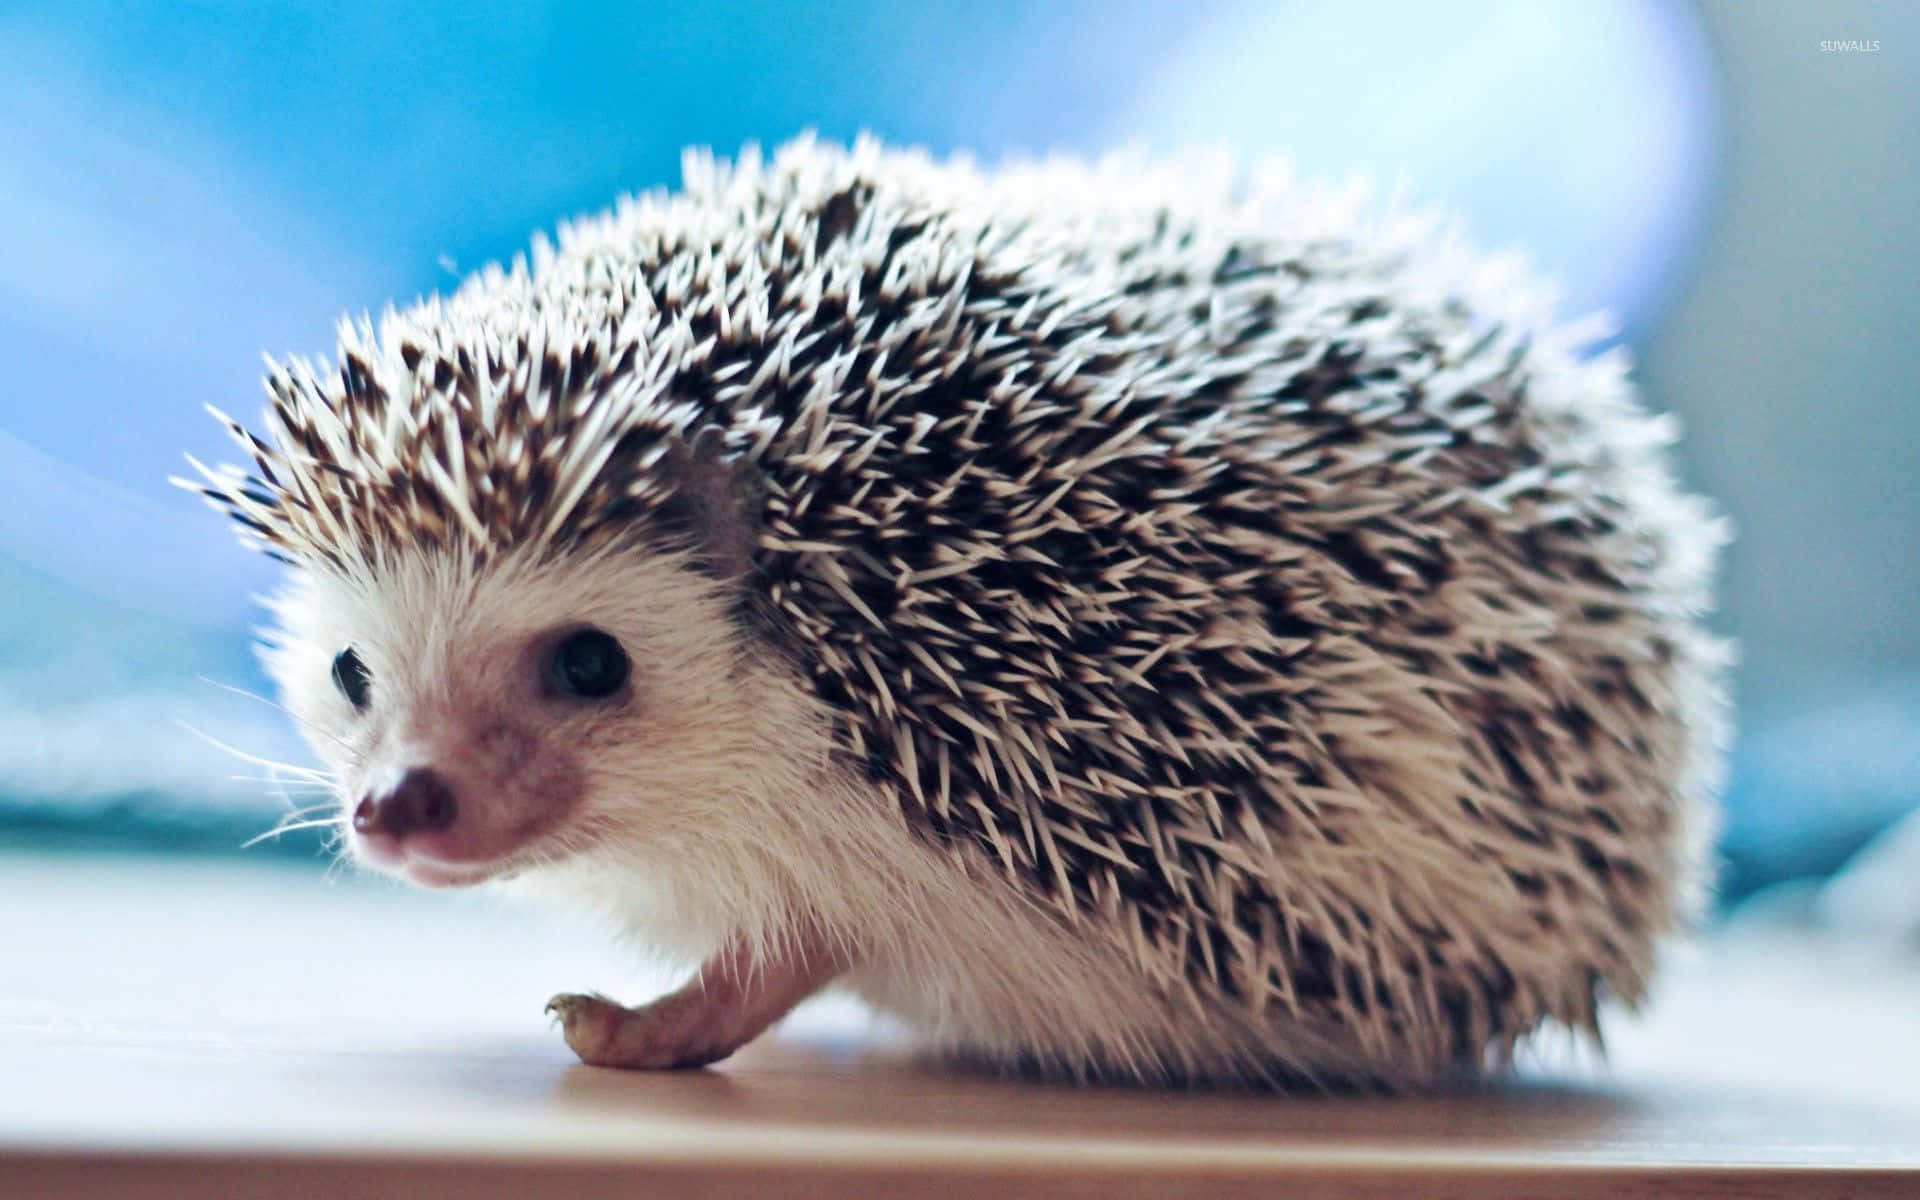 Cute Hedgehog Walking On Table Picture